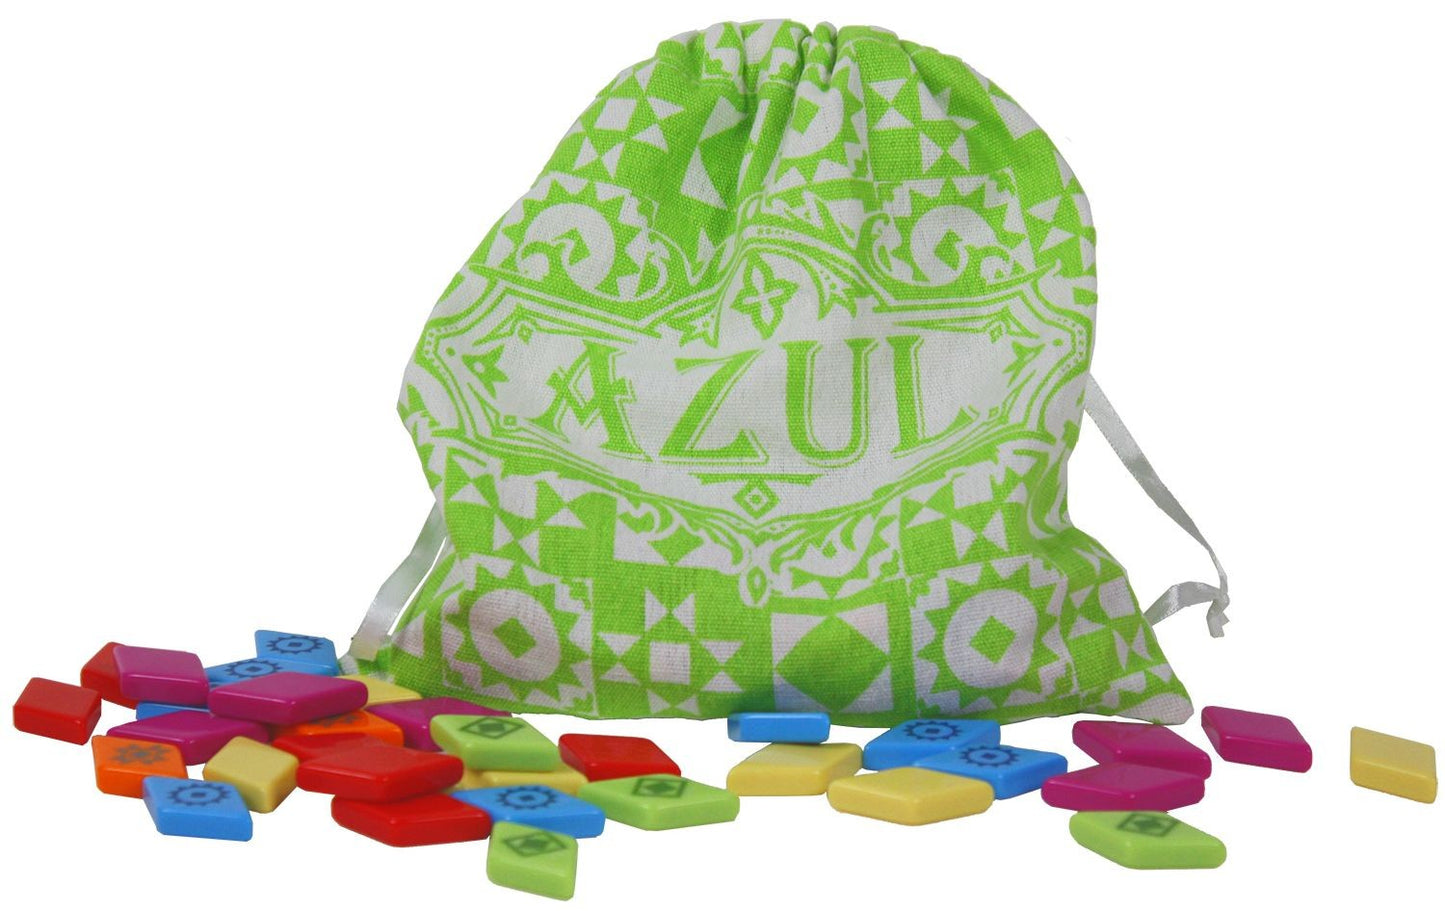 Azul: Summer Pavilion tile bag and sample tiles